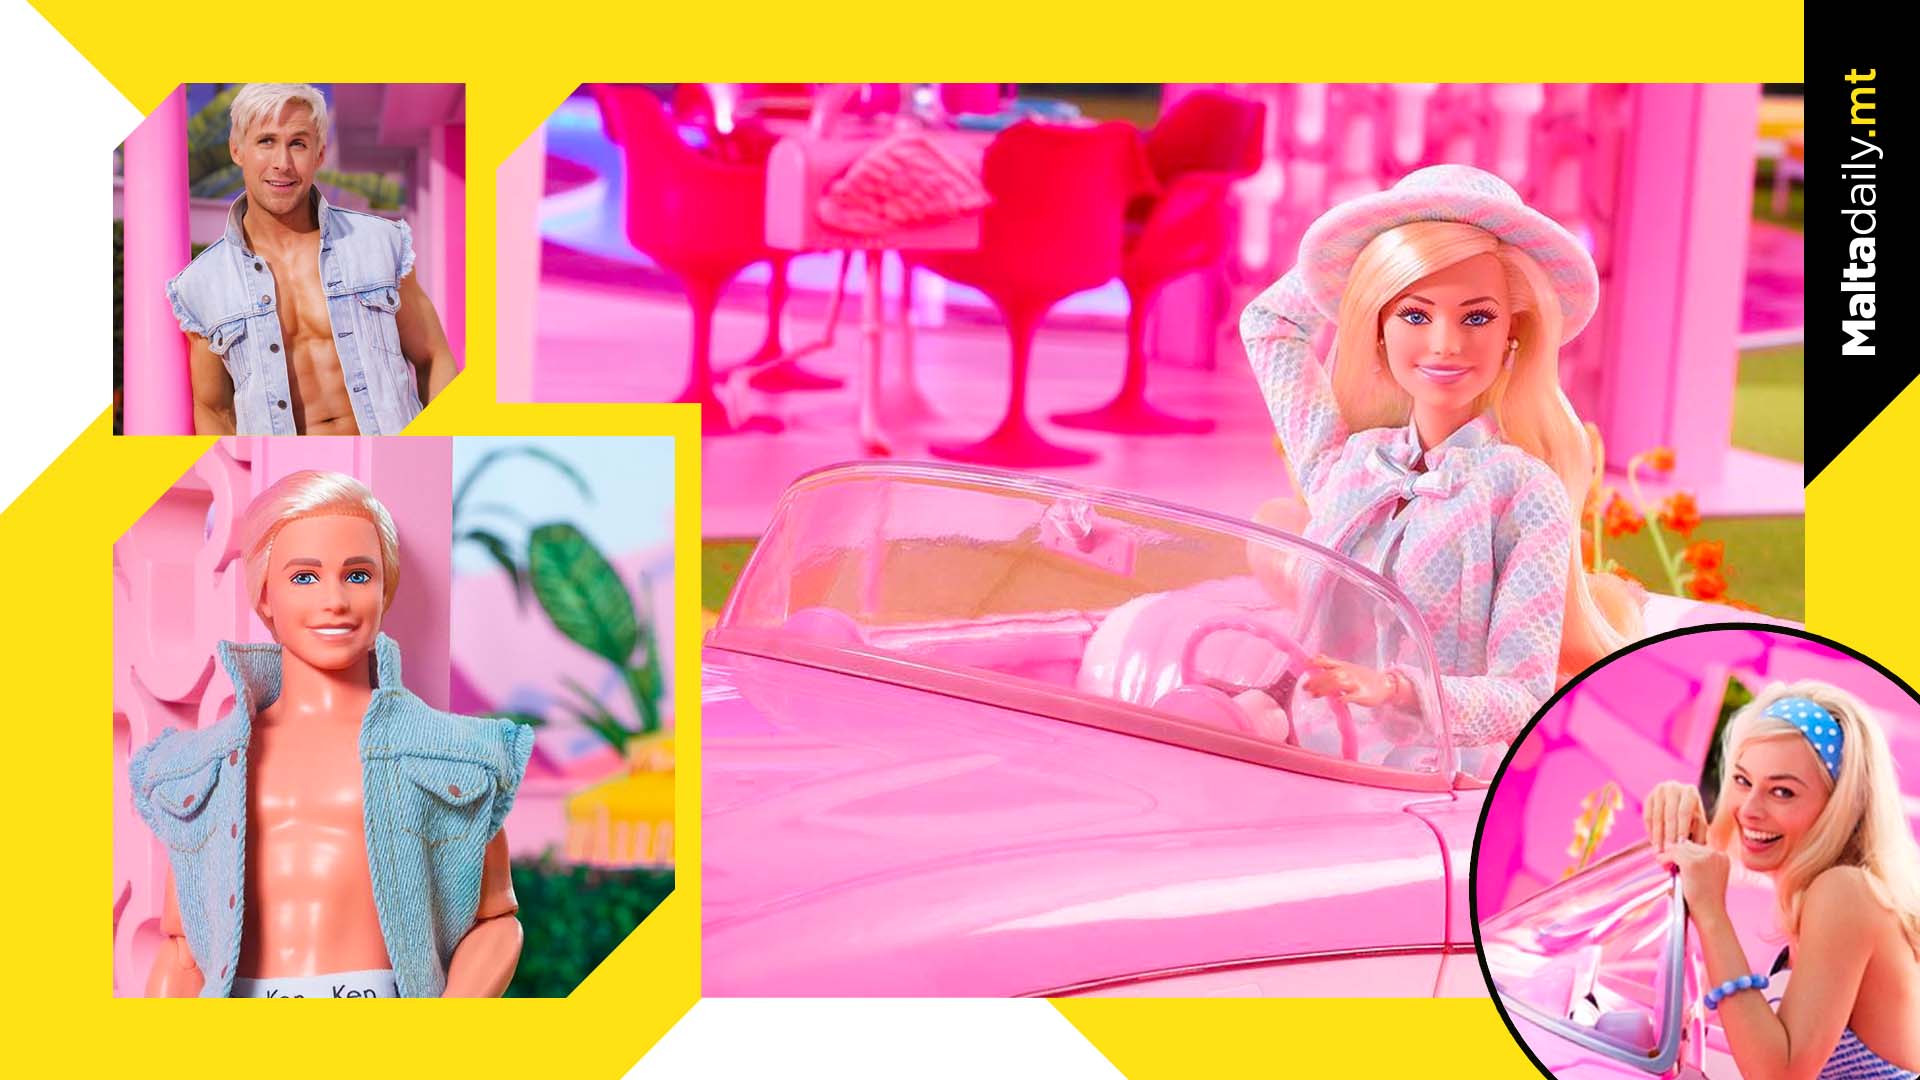 Margot Robbie & Ryan Gosling Barbie dolls released